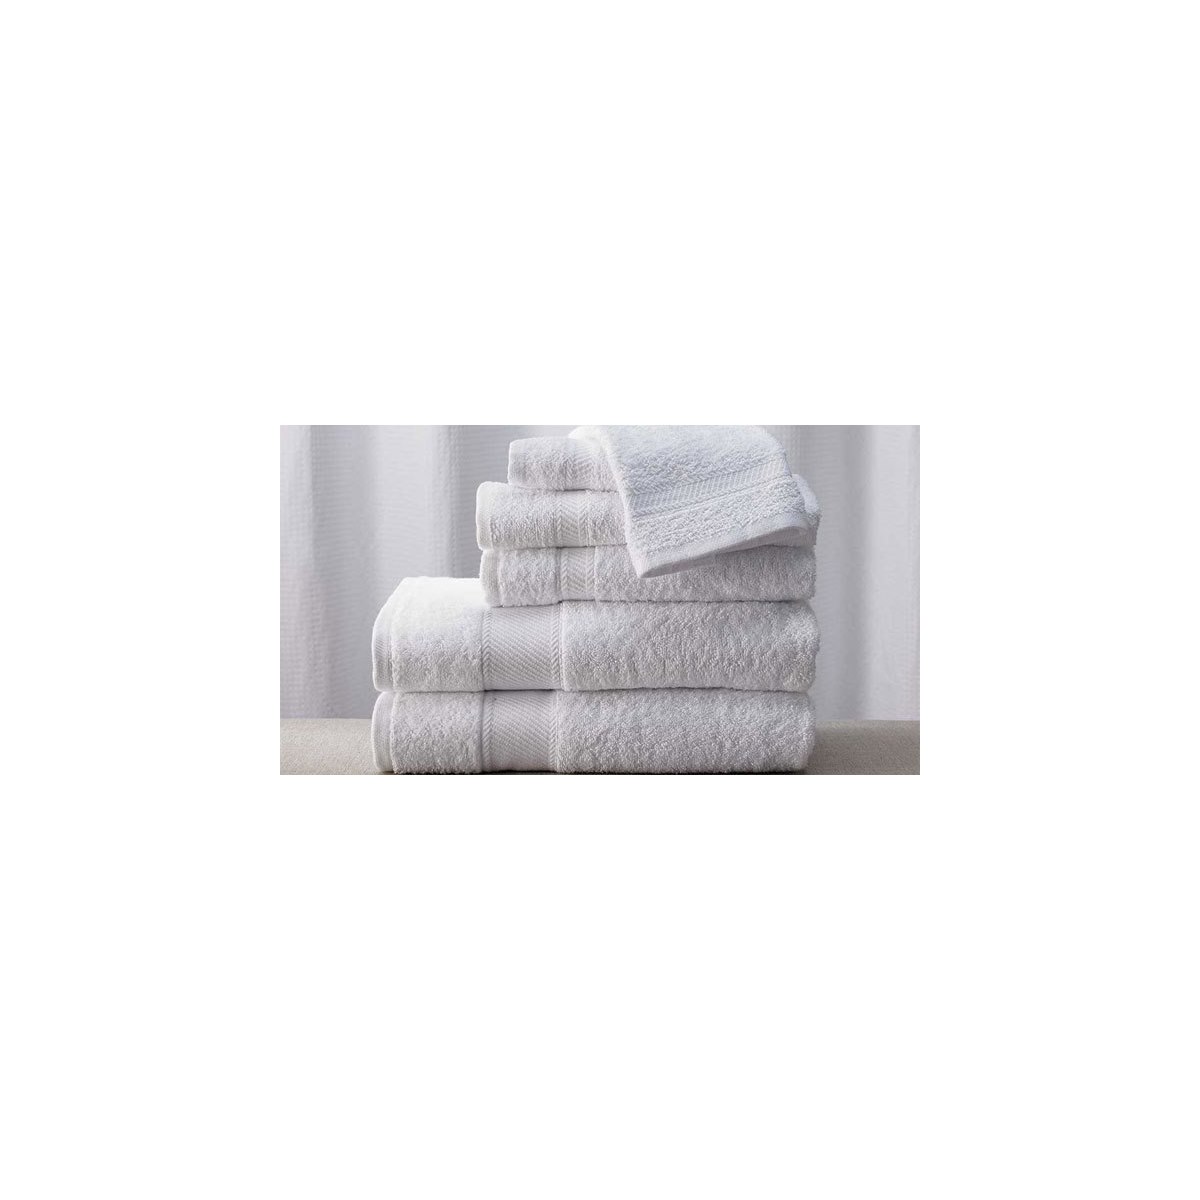 Where to Buy Towel Softener